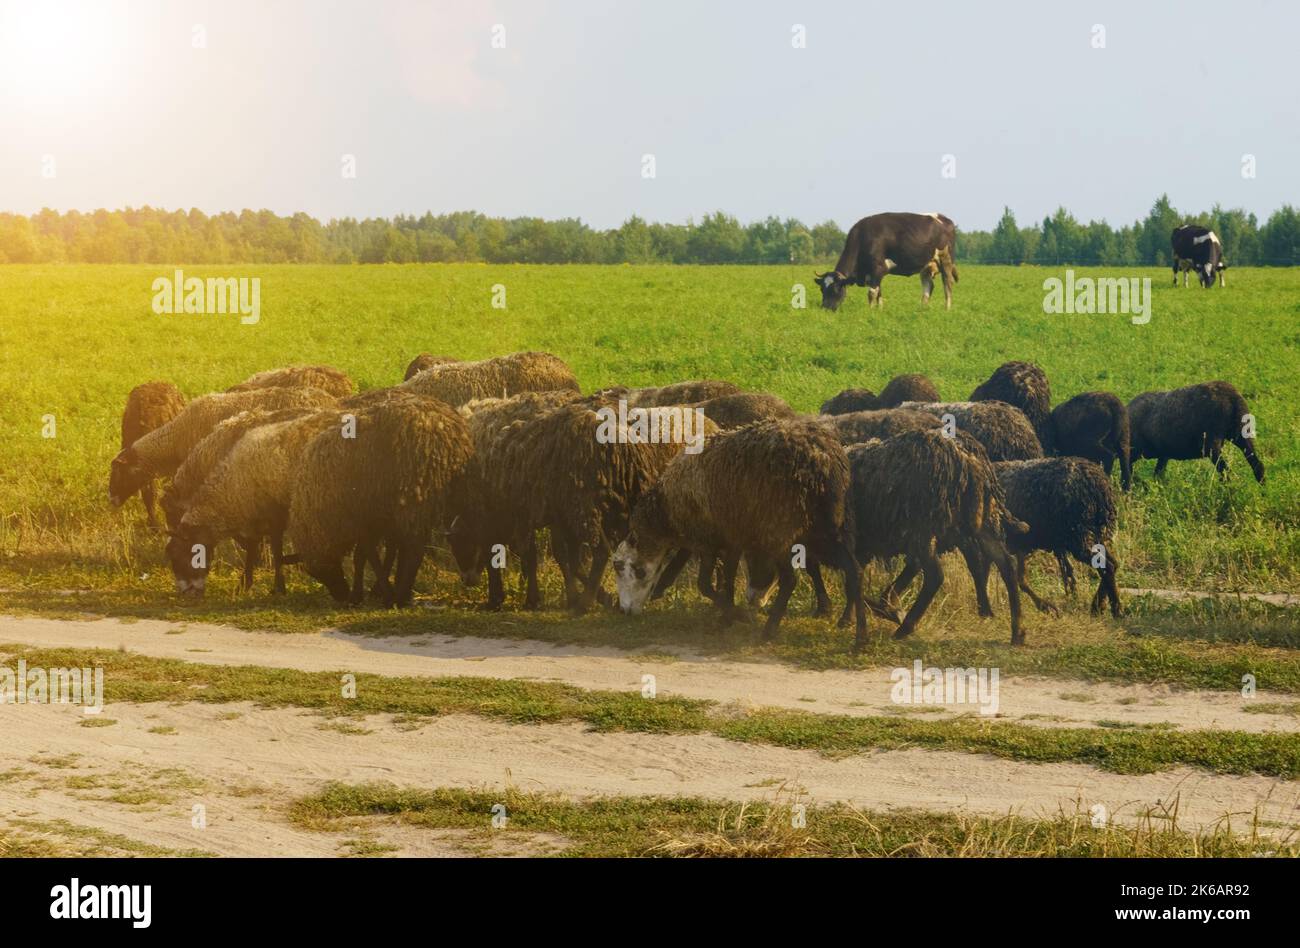 Livestock raising. A flock of sheep graze in the field. Stock Photo